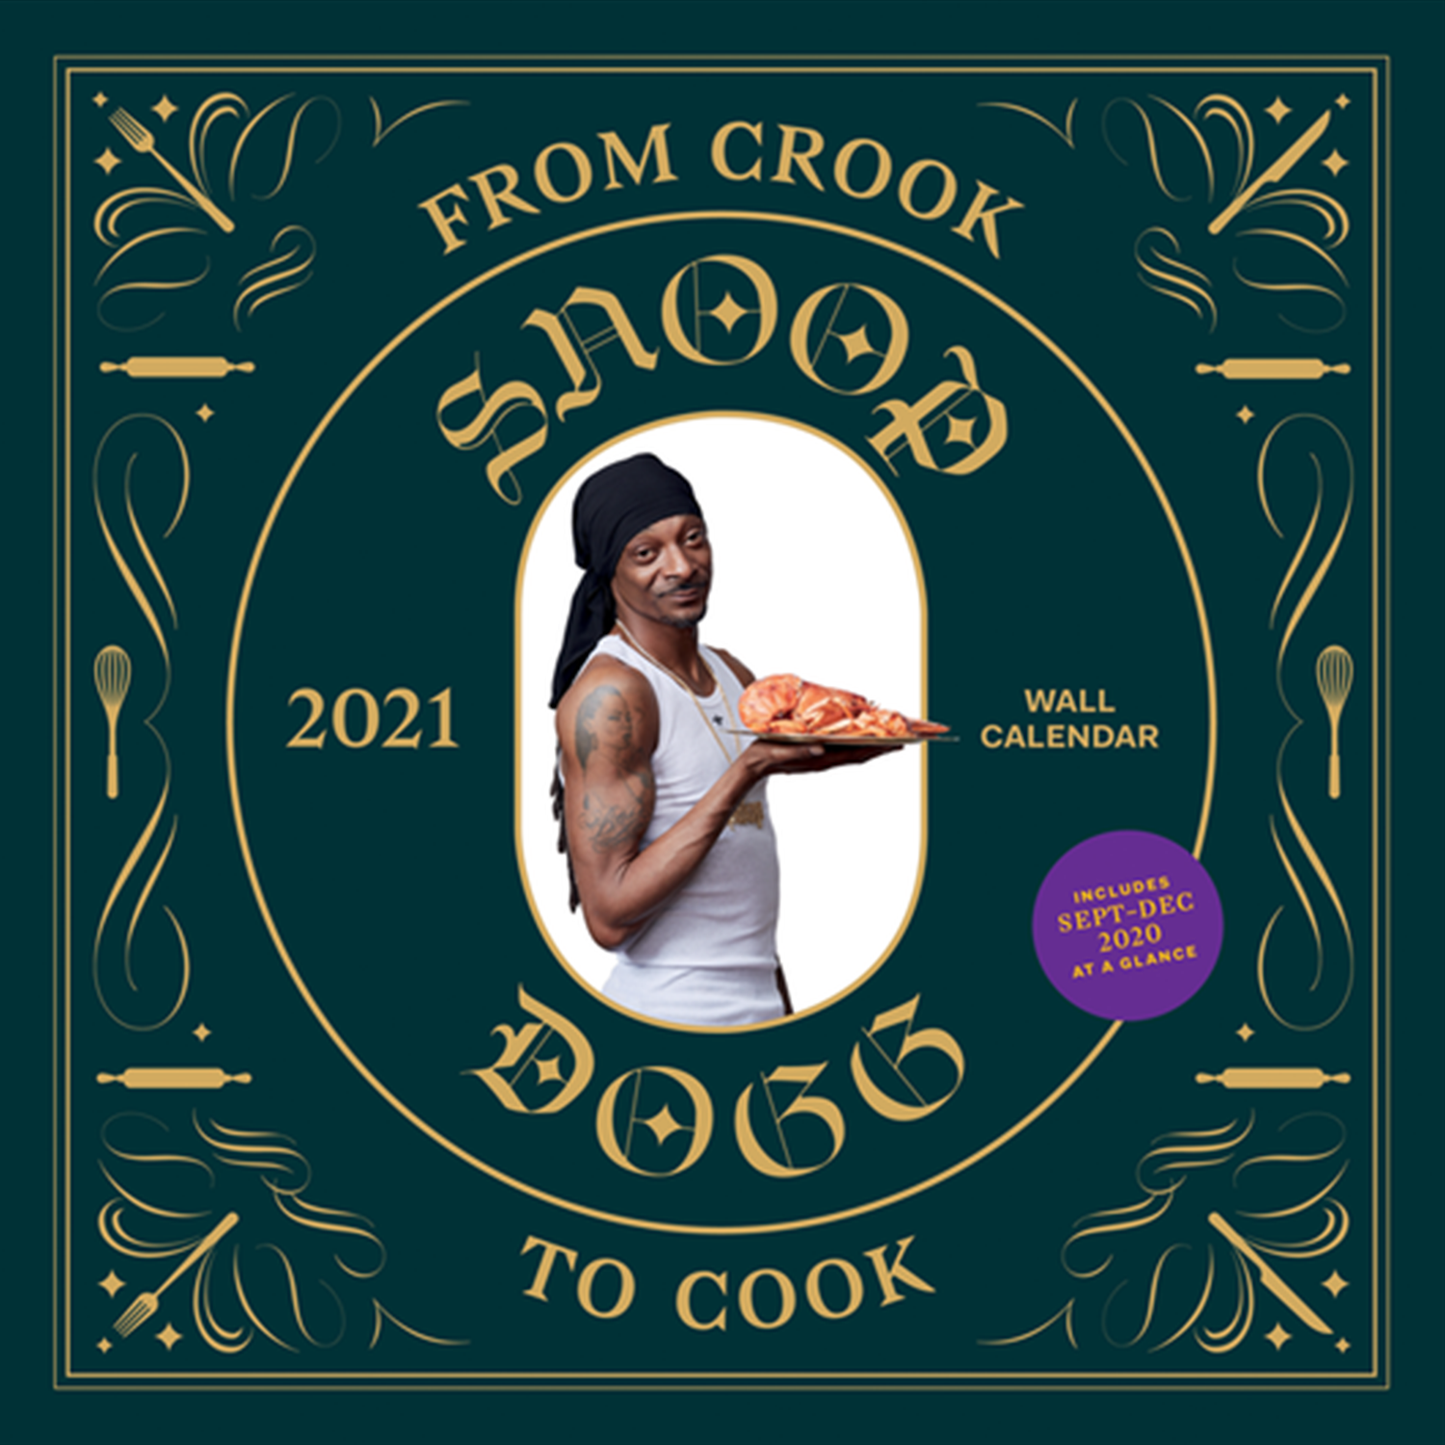 Snoop Dogg "From Crook To Cook" Calendar 2021